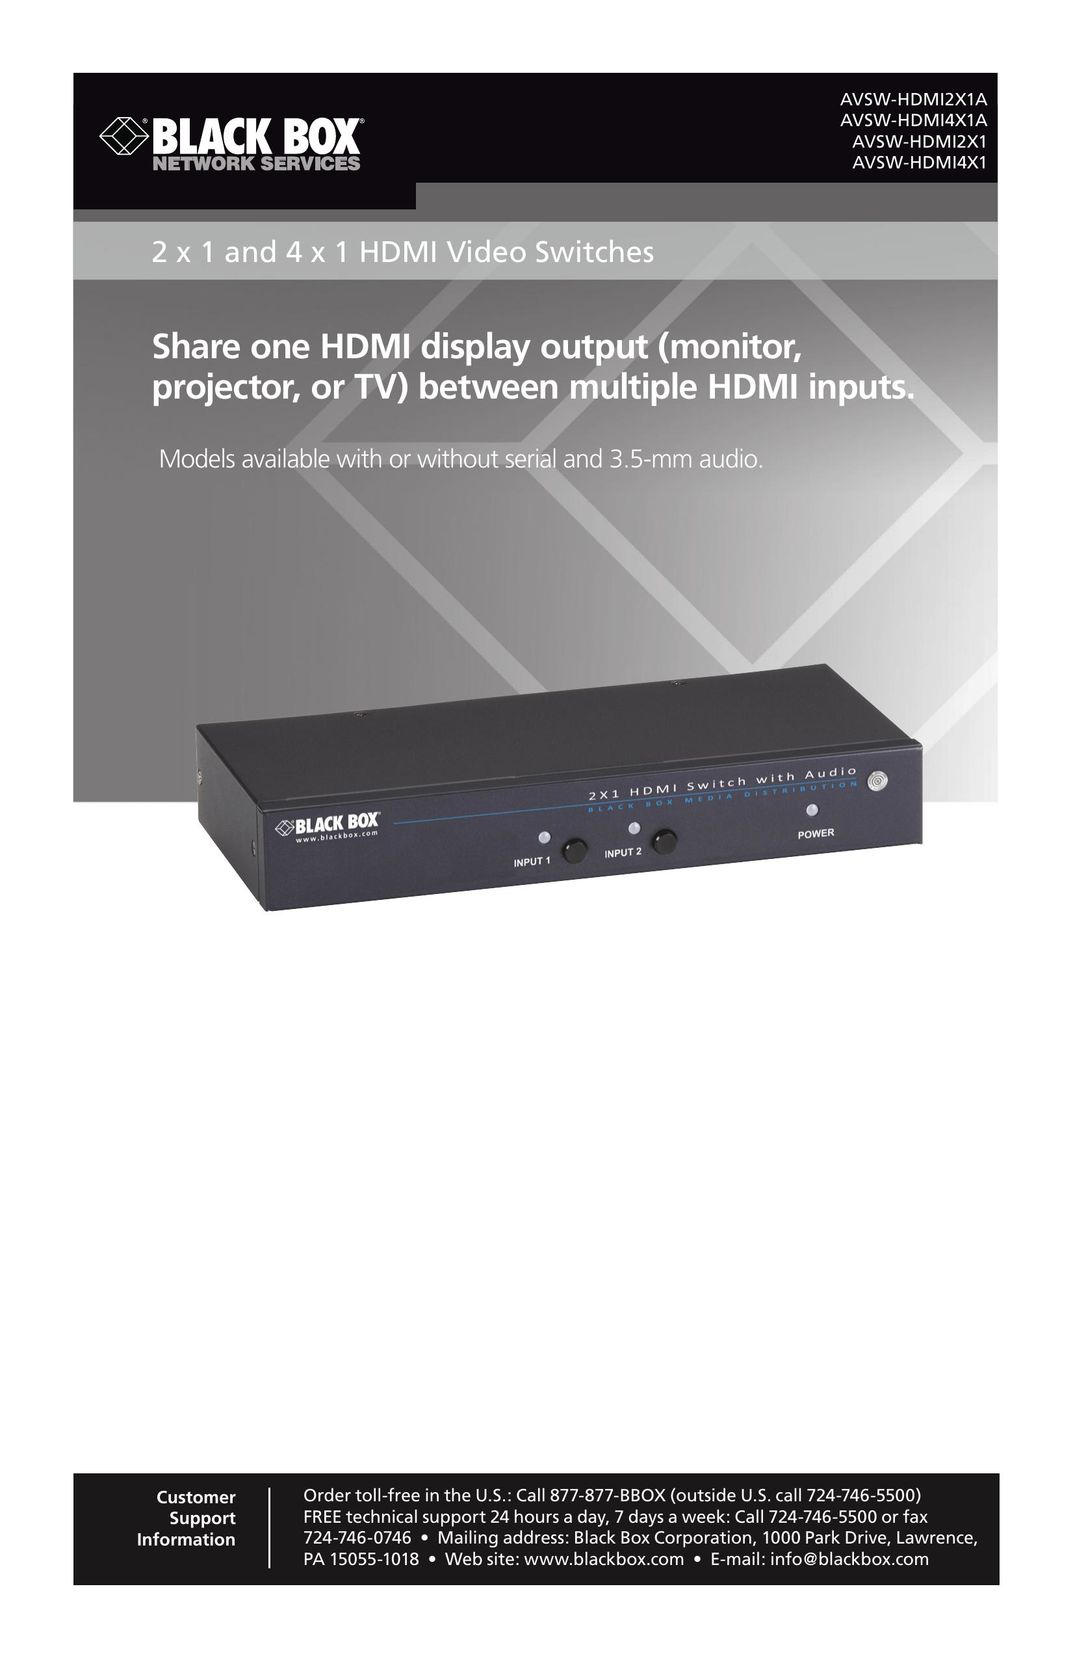 Black Box AVSW-HDMI4X1A TV Video Accessories User Manual